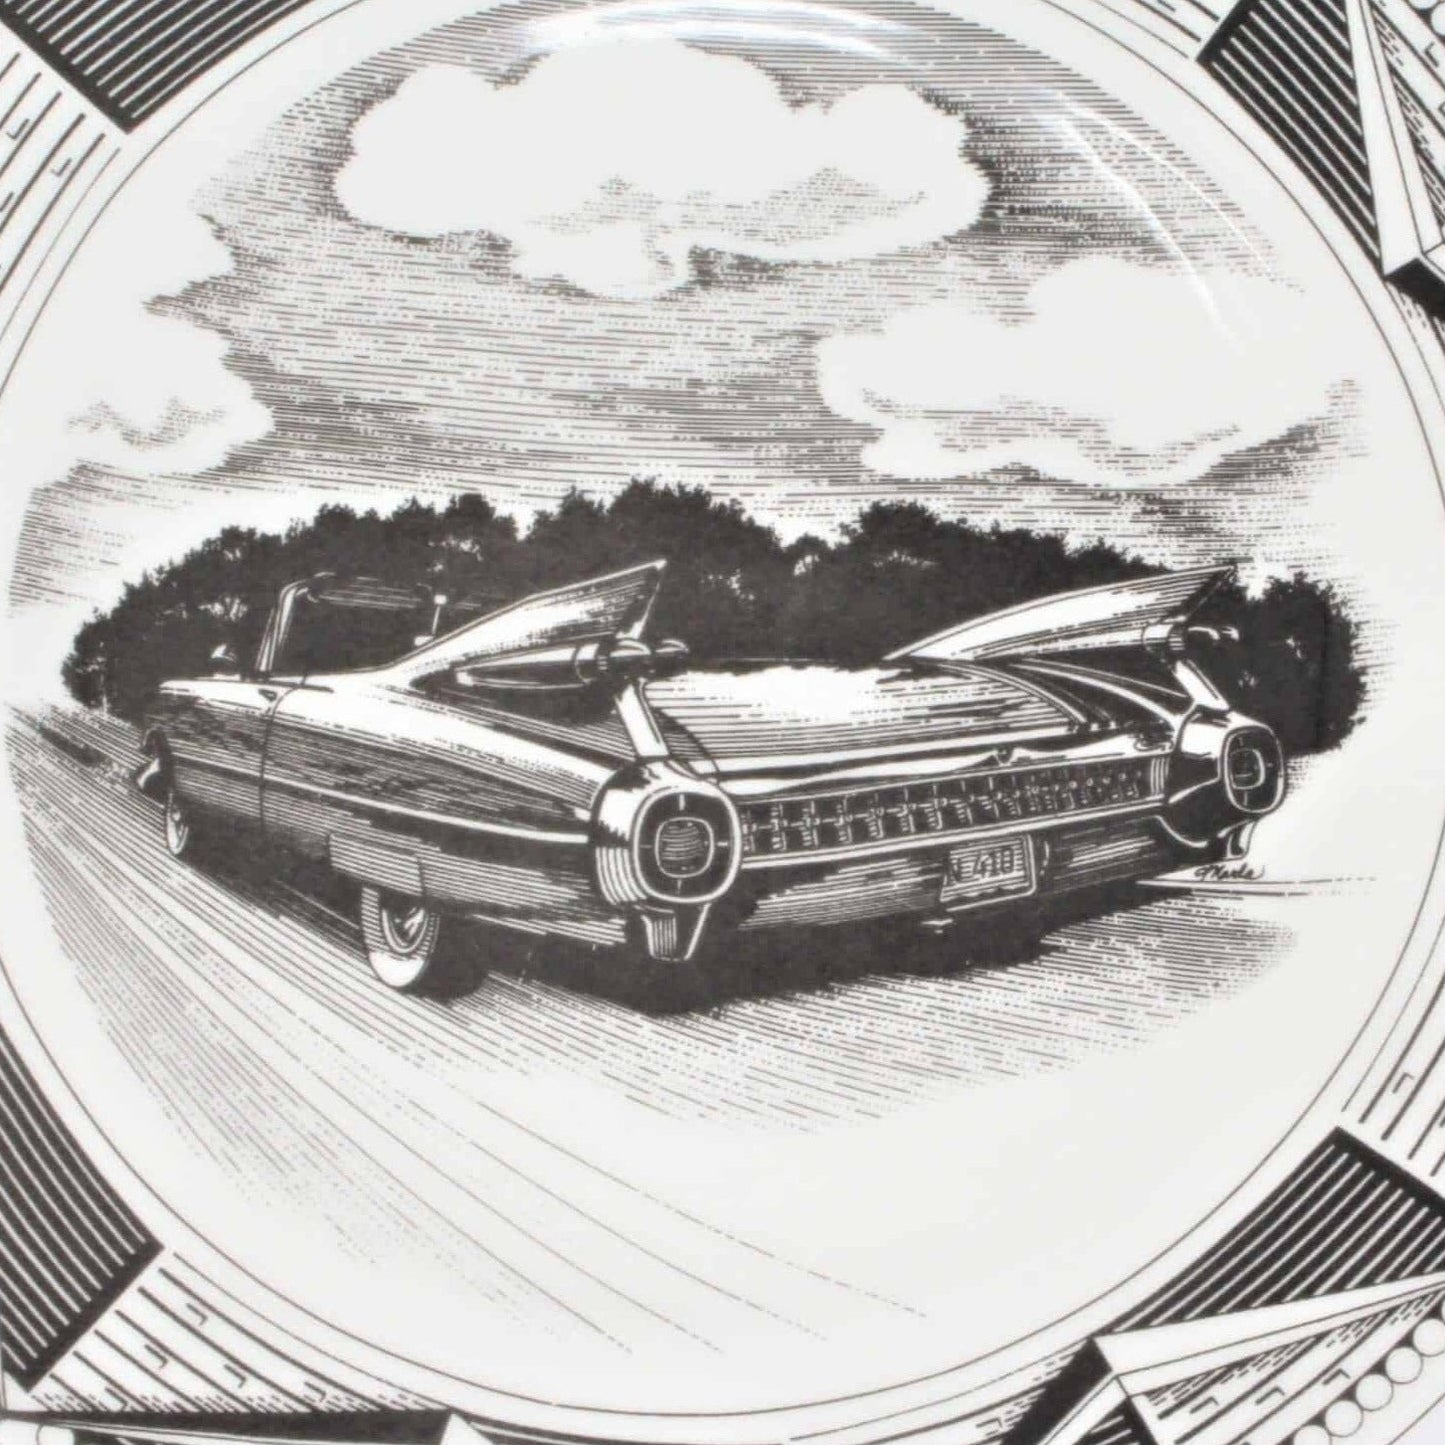 Dinner Plate, Slice of Life, 1959 Cadillac Coupe DeVille, Marla Shega